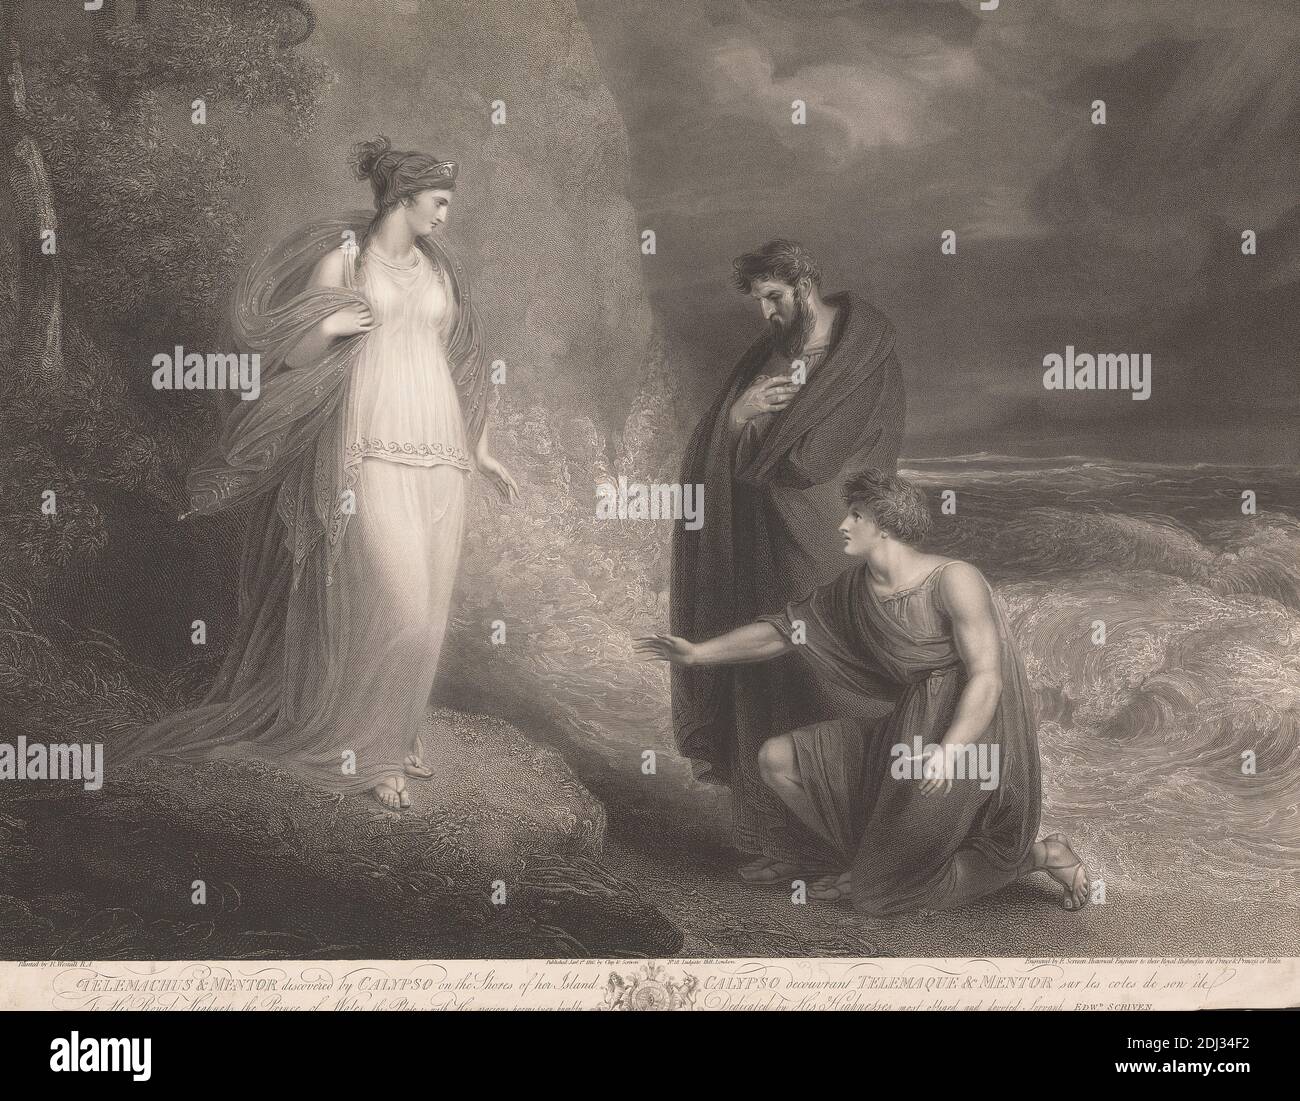 Mythology High Resolution Stock Photography and Images - Alamy